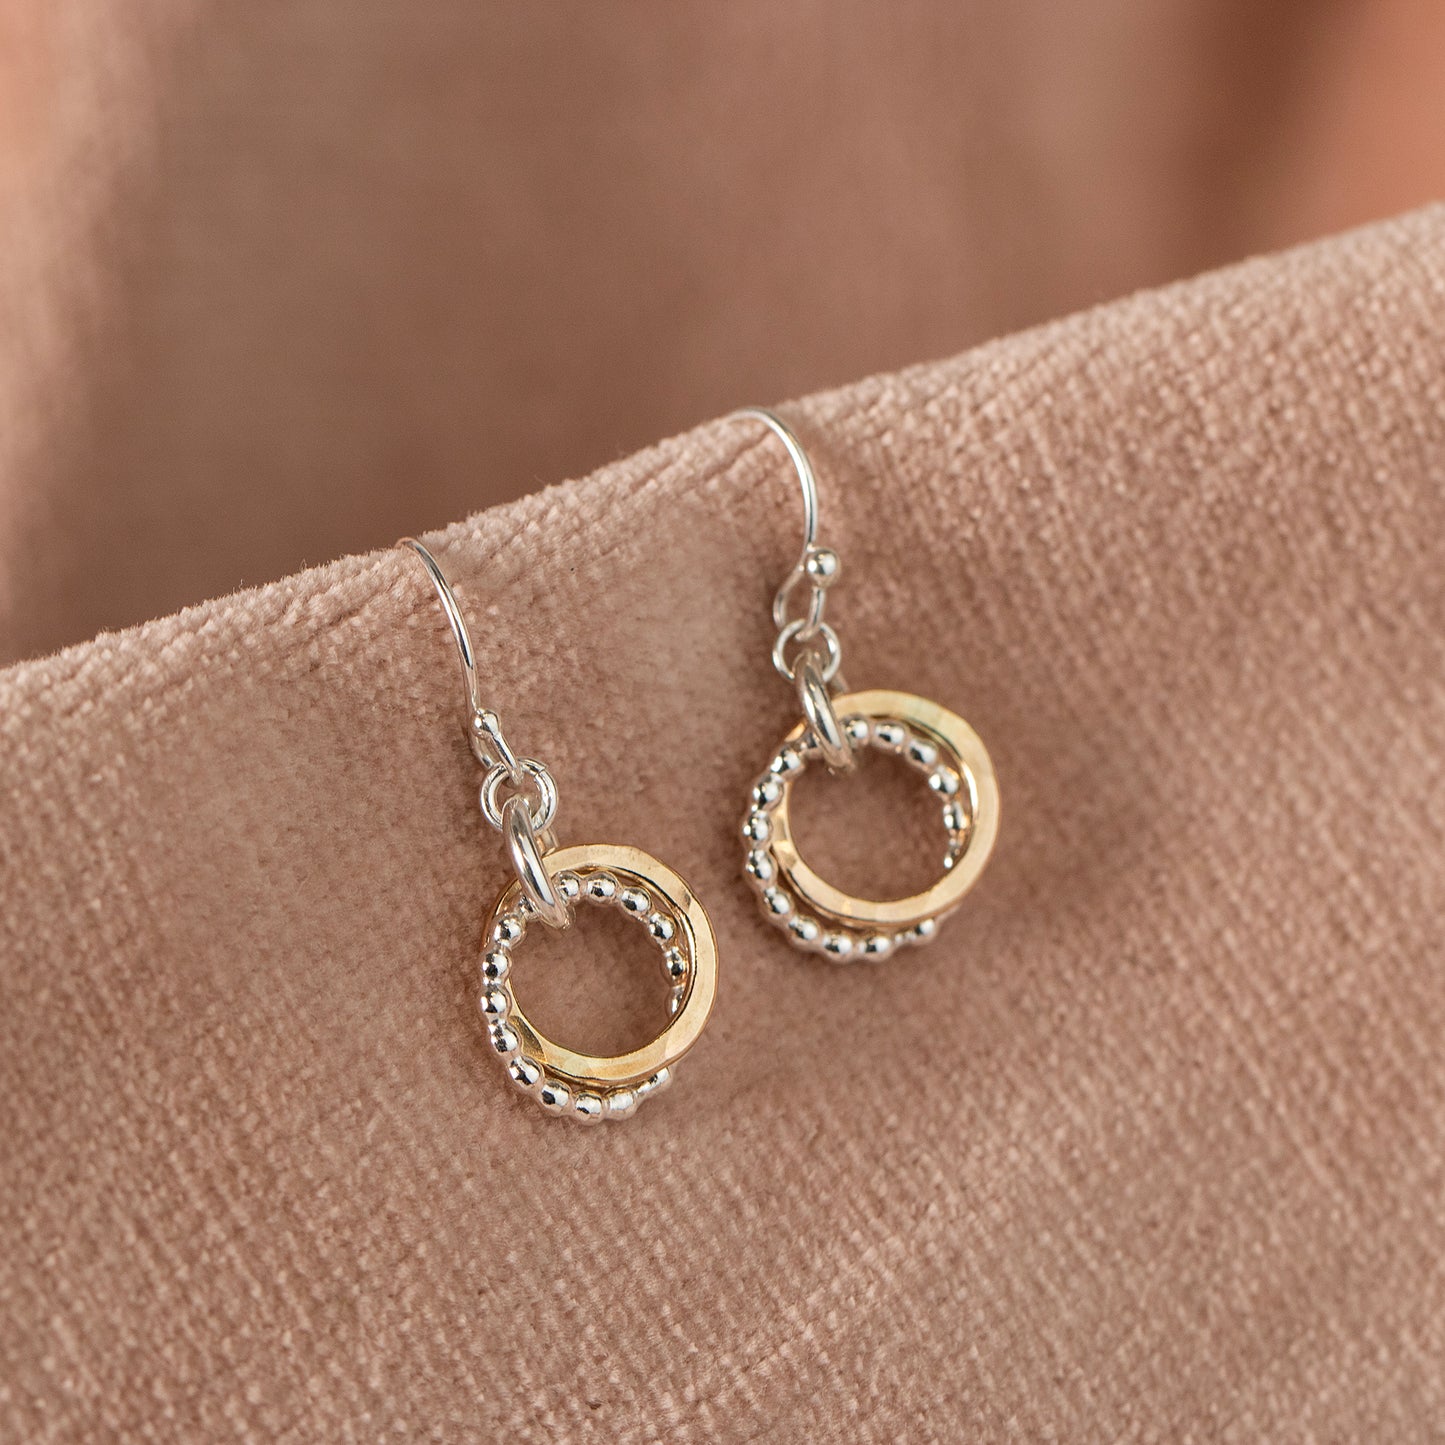 Valentines Gift for Her - Love Knot Earrings - Linked for Lifetime